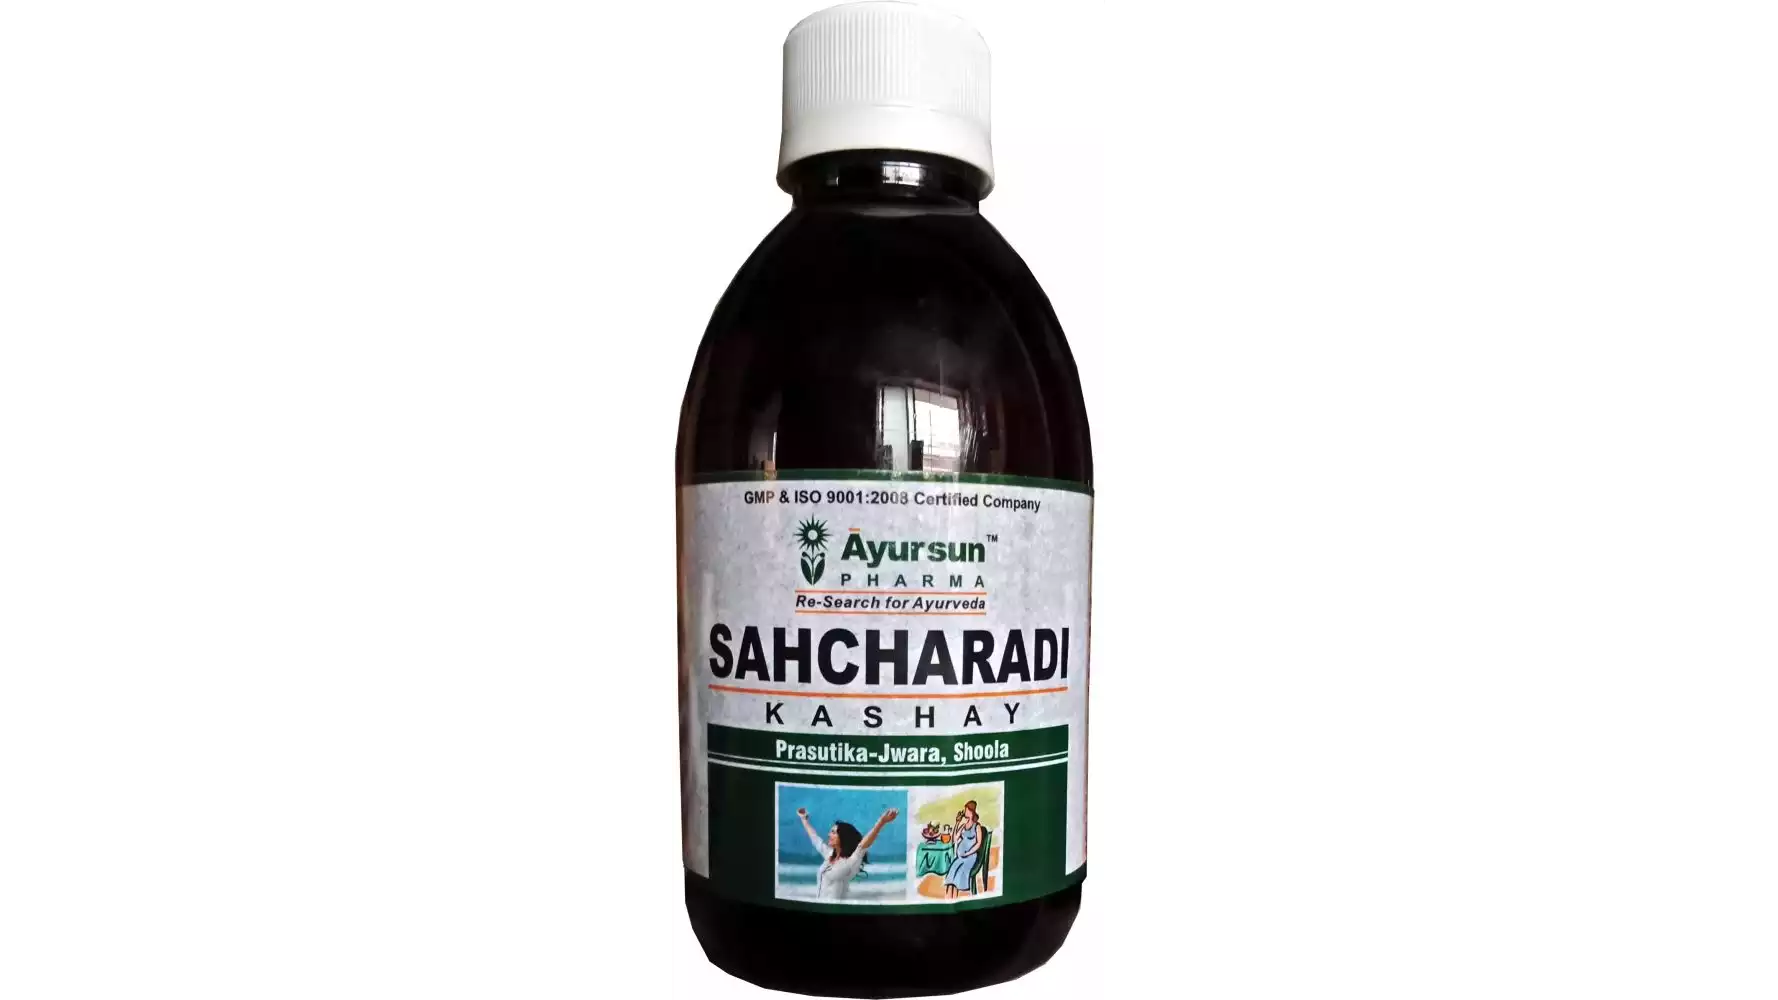 Ayursun Pharma Sahcharadi Kashay (250ml)